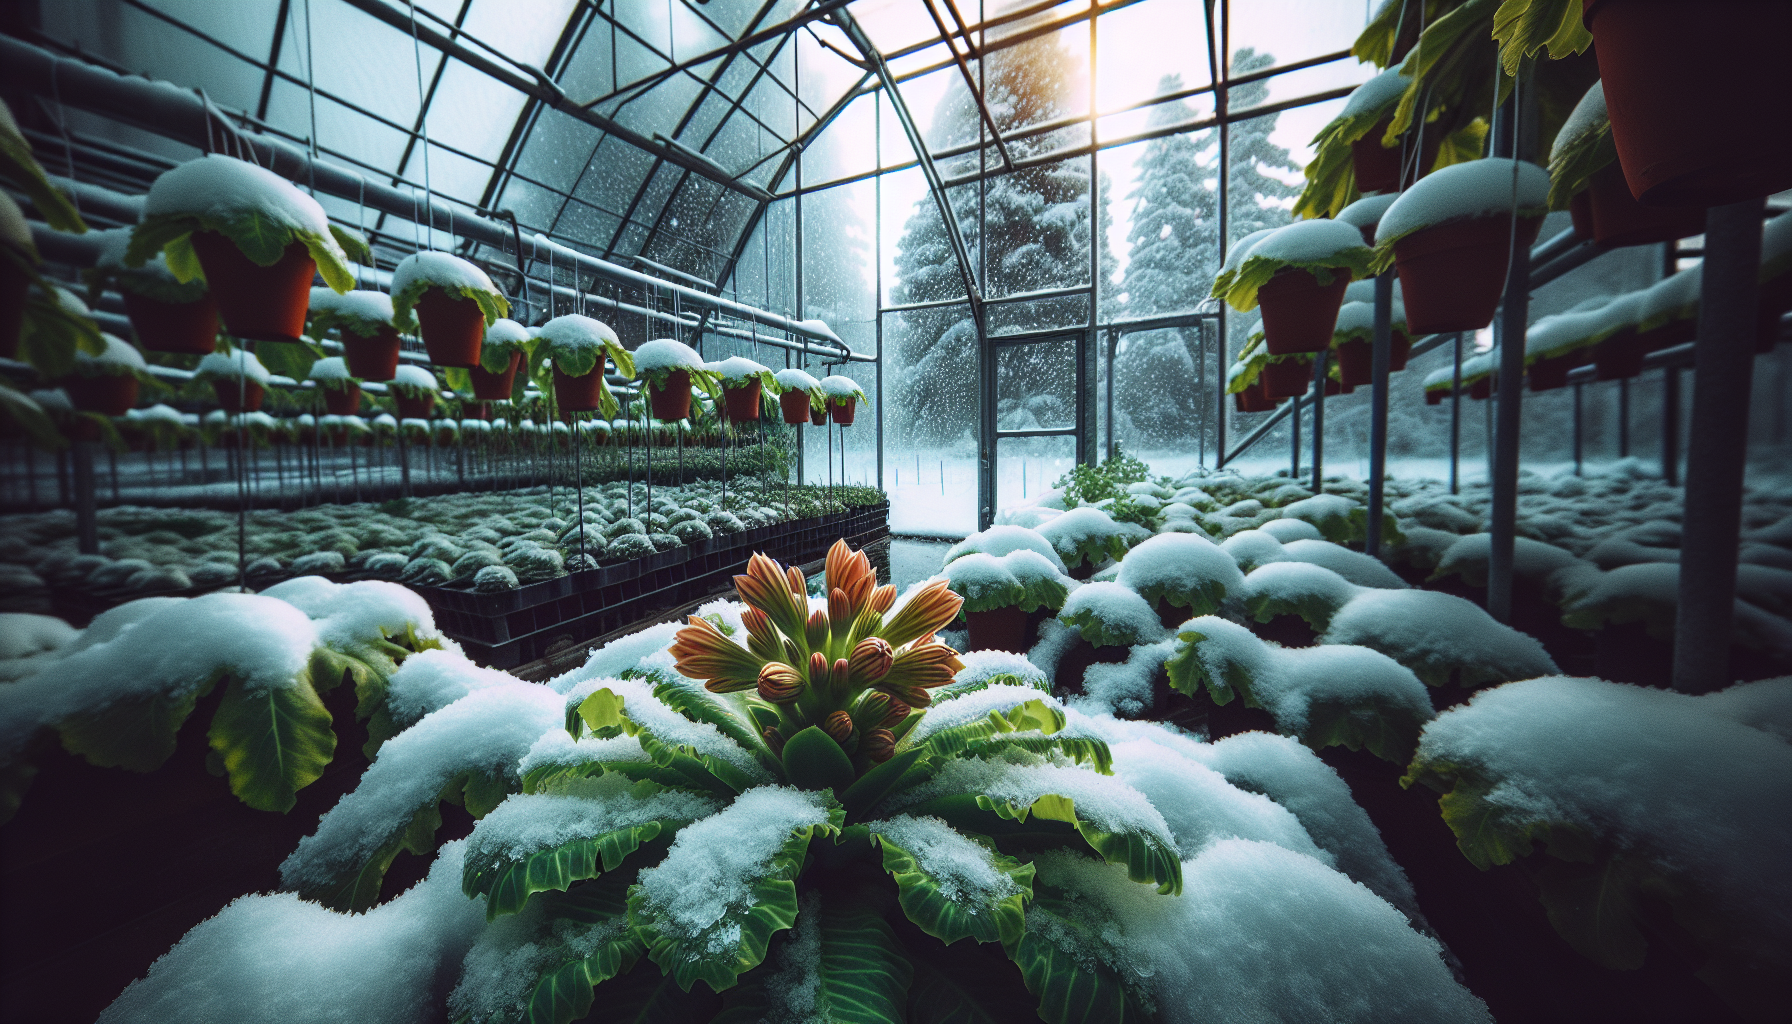 Touring Impressive Winter Greenhouse Gardens